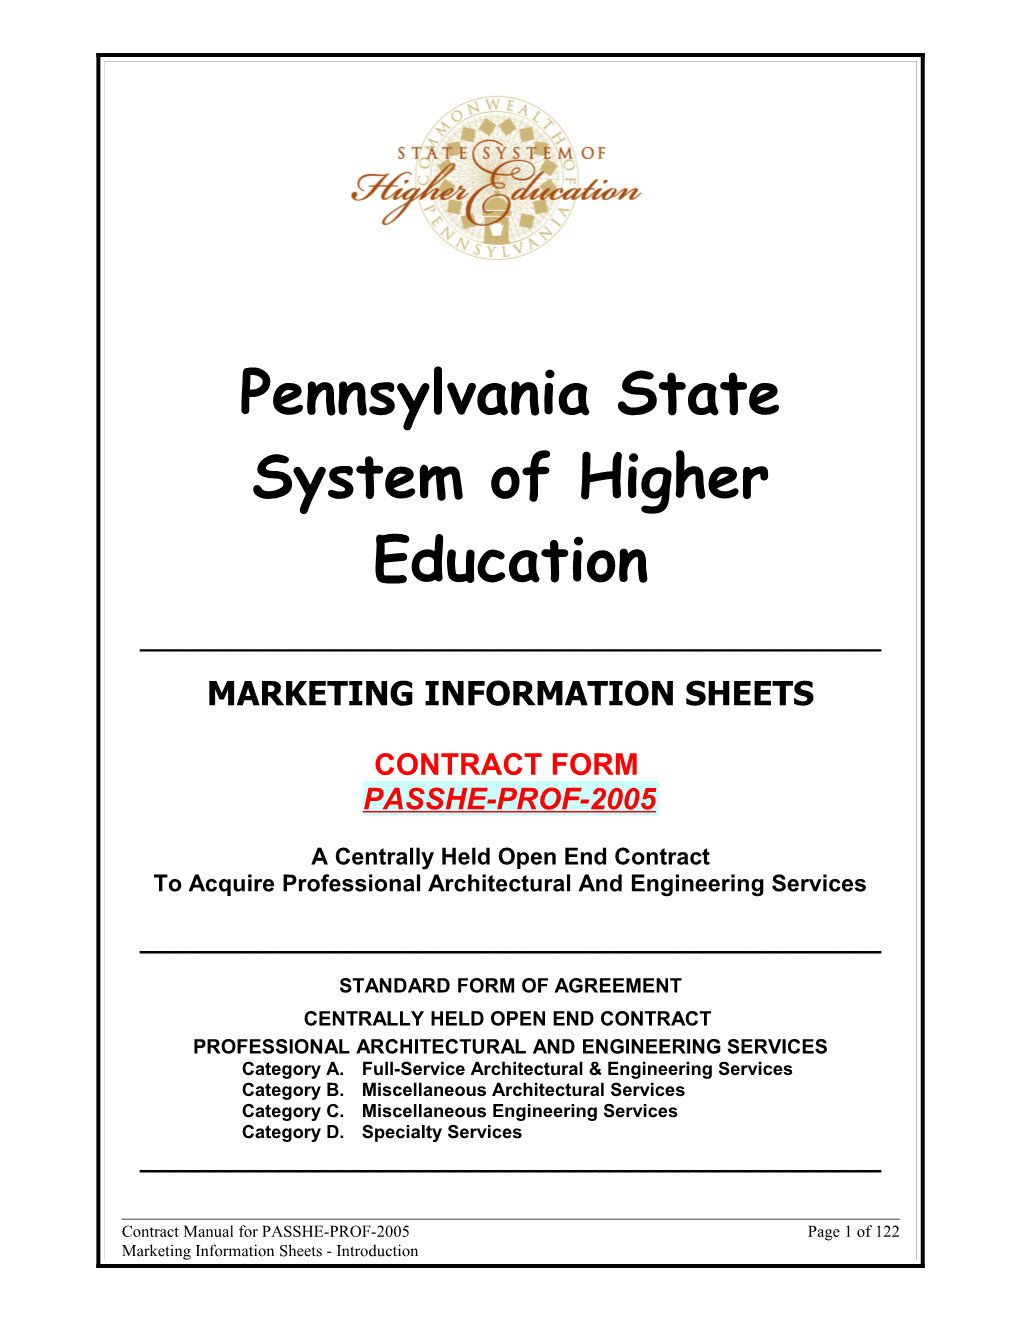 Pennsylvaniastate System of Higher Education